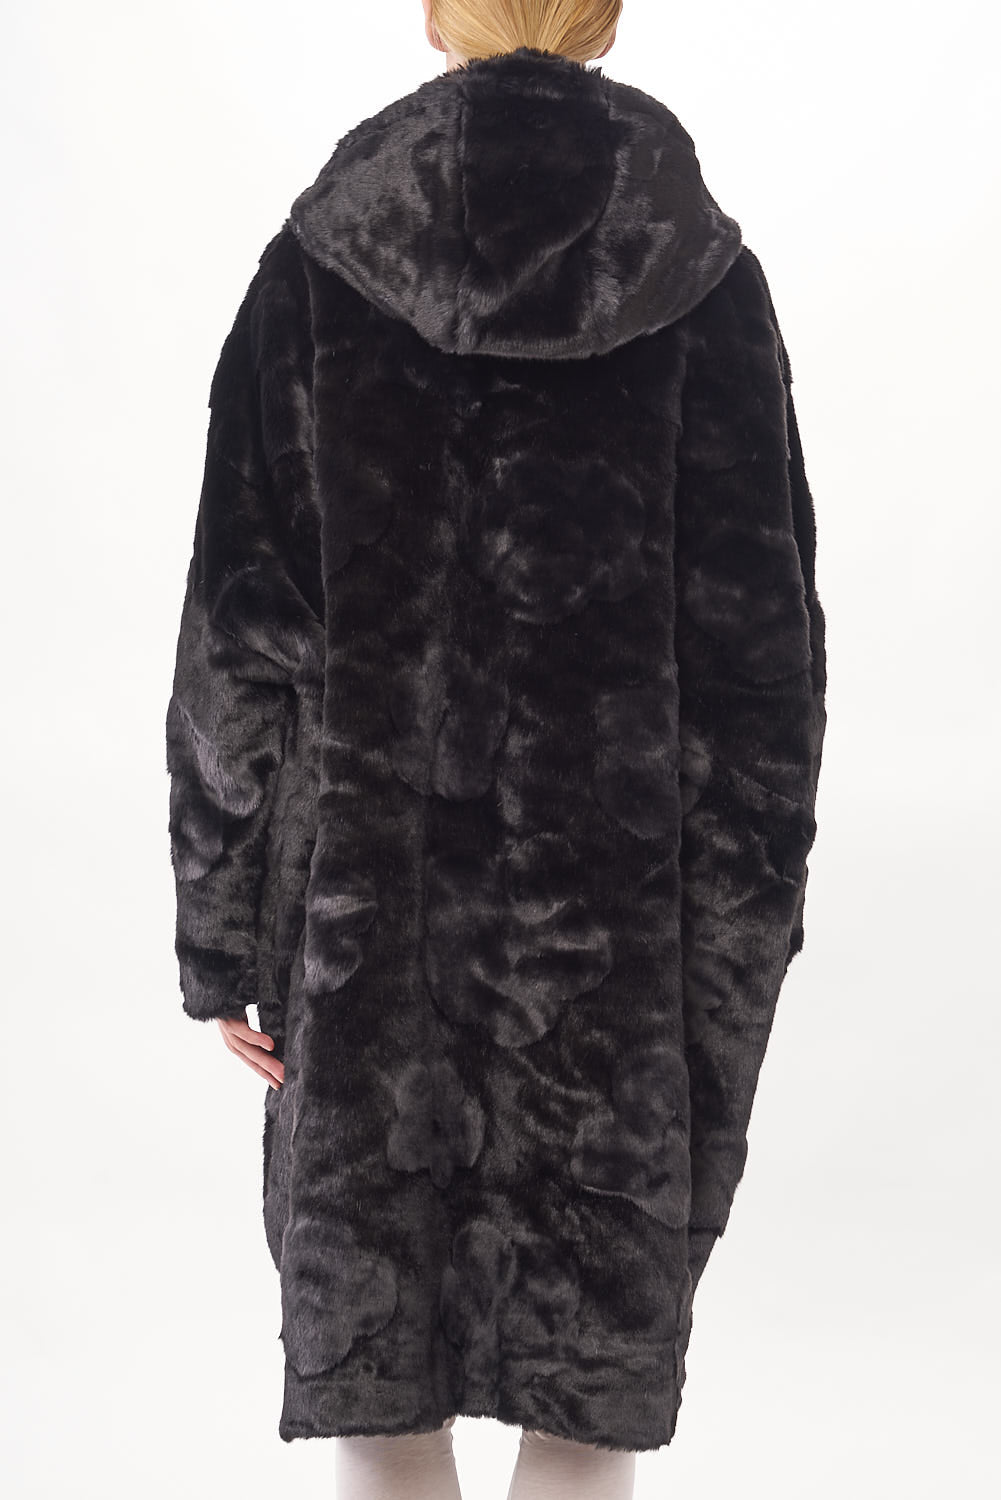 Rundholz Black Label - Faux Fur Coat